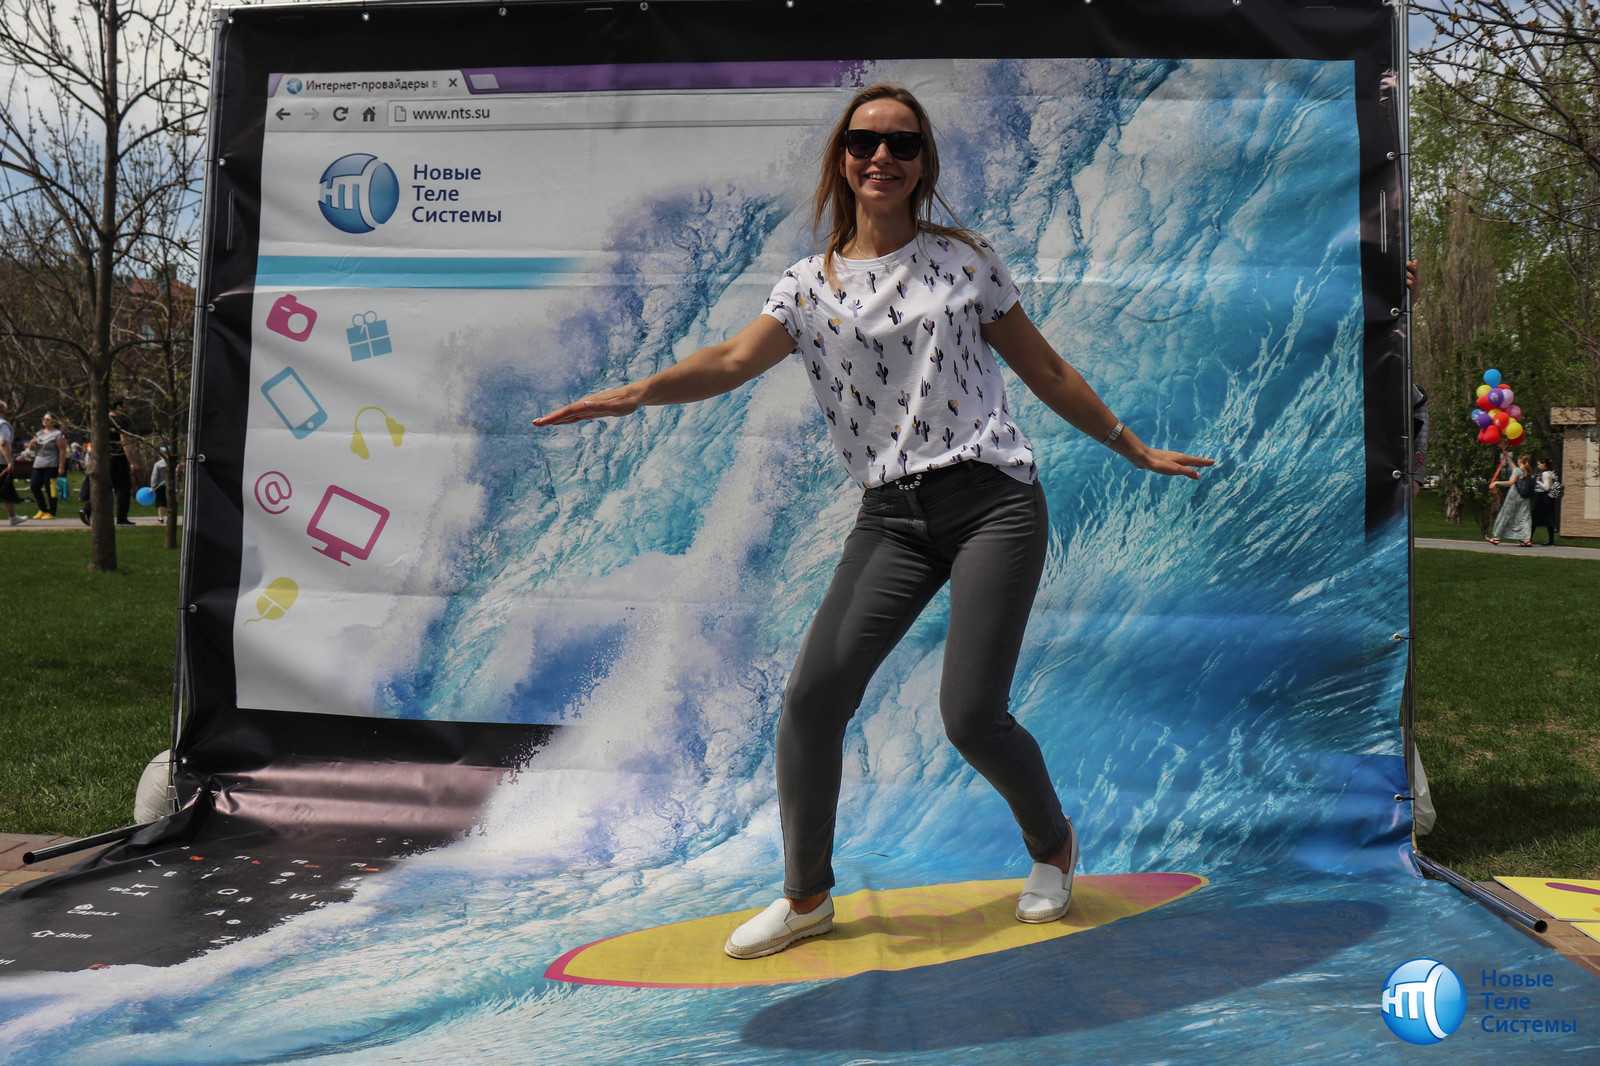 Surfing the internet is. Серфинг в интернете. Интернет серфер. Фотозона серфер. Посёрфить в интернете.